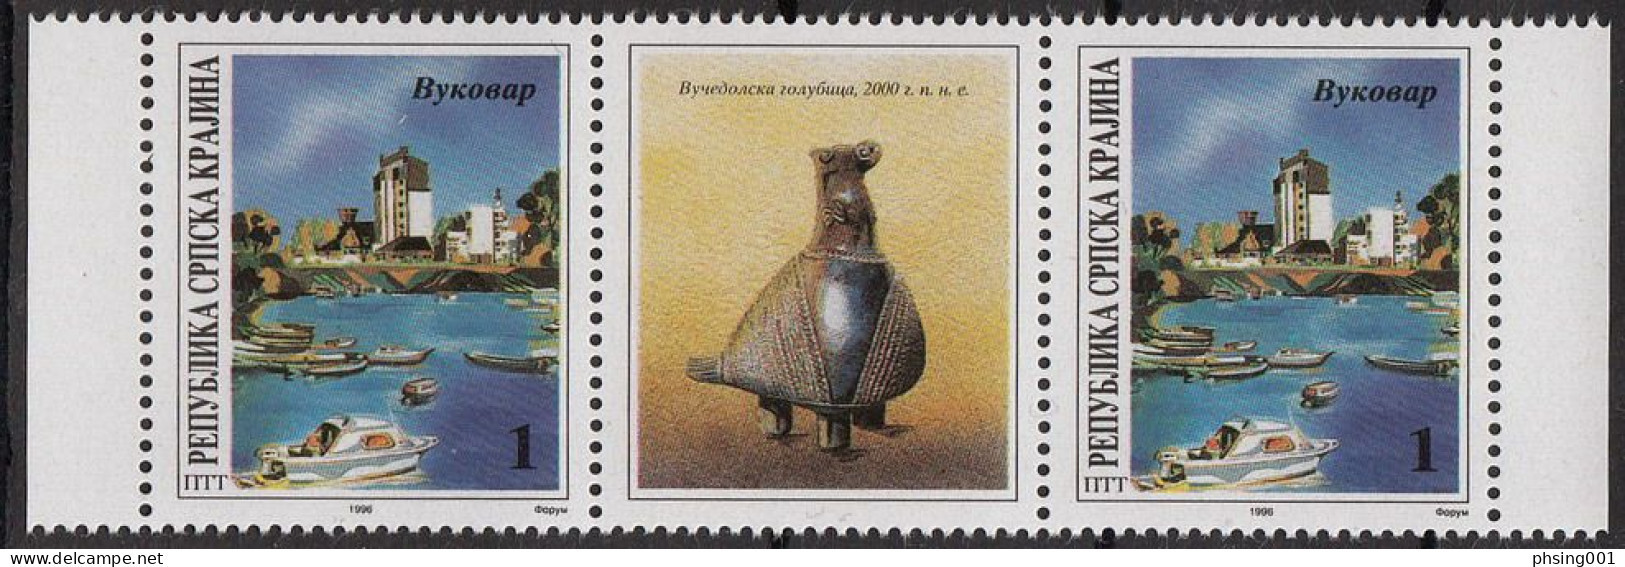 Croatia 1996 Serbian Krajina River Danube Boats, Middle Row, 2 Stamps With Label MNH - Kroatien